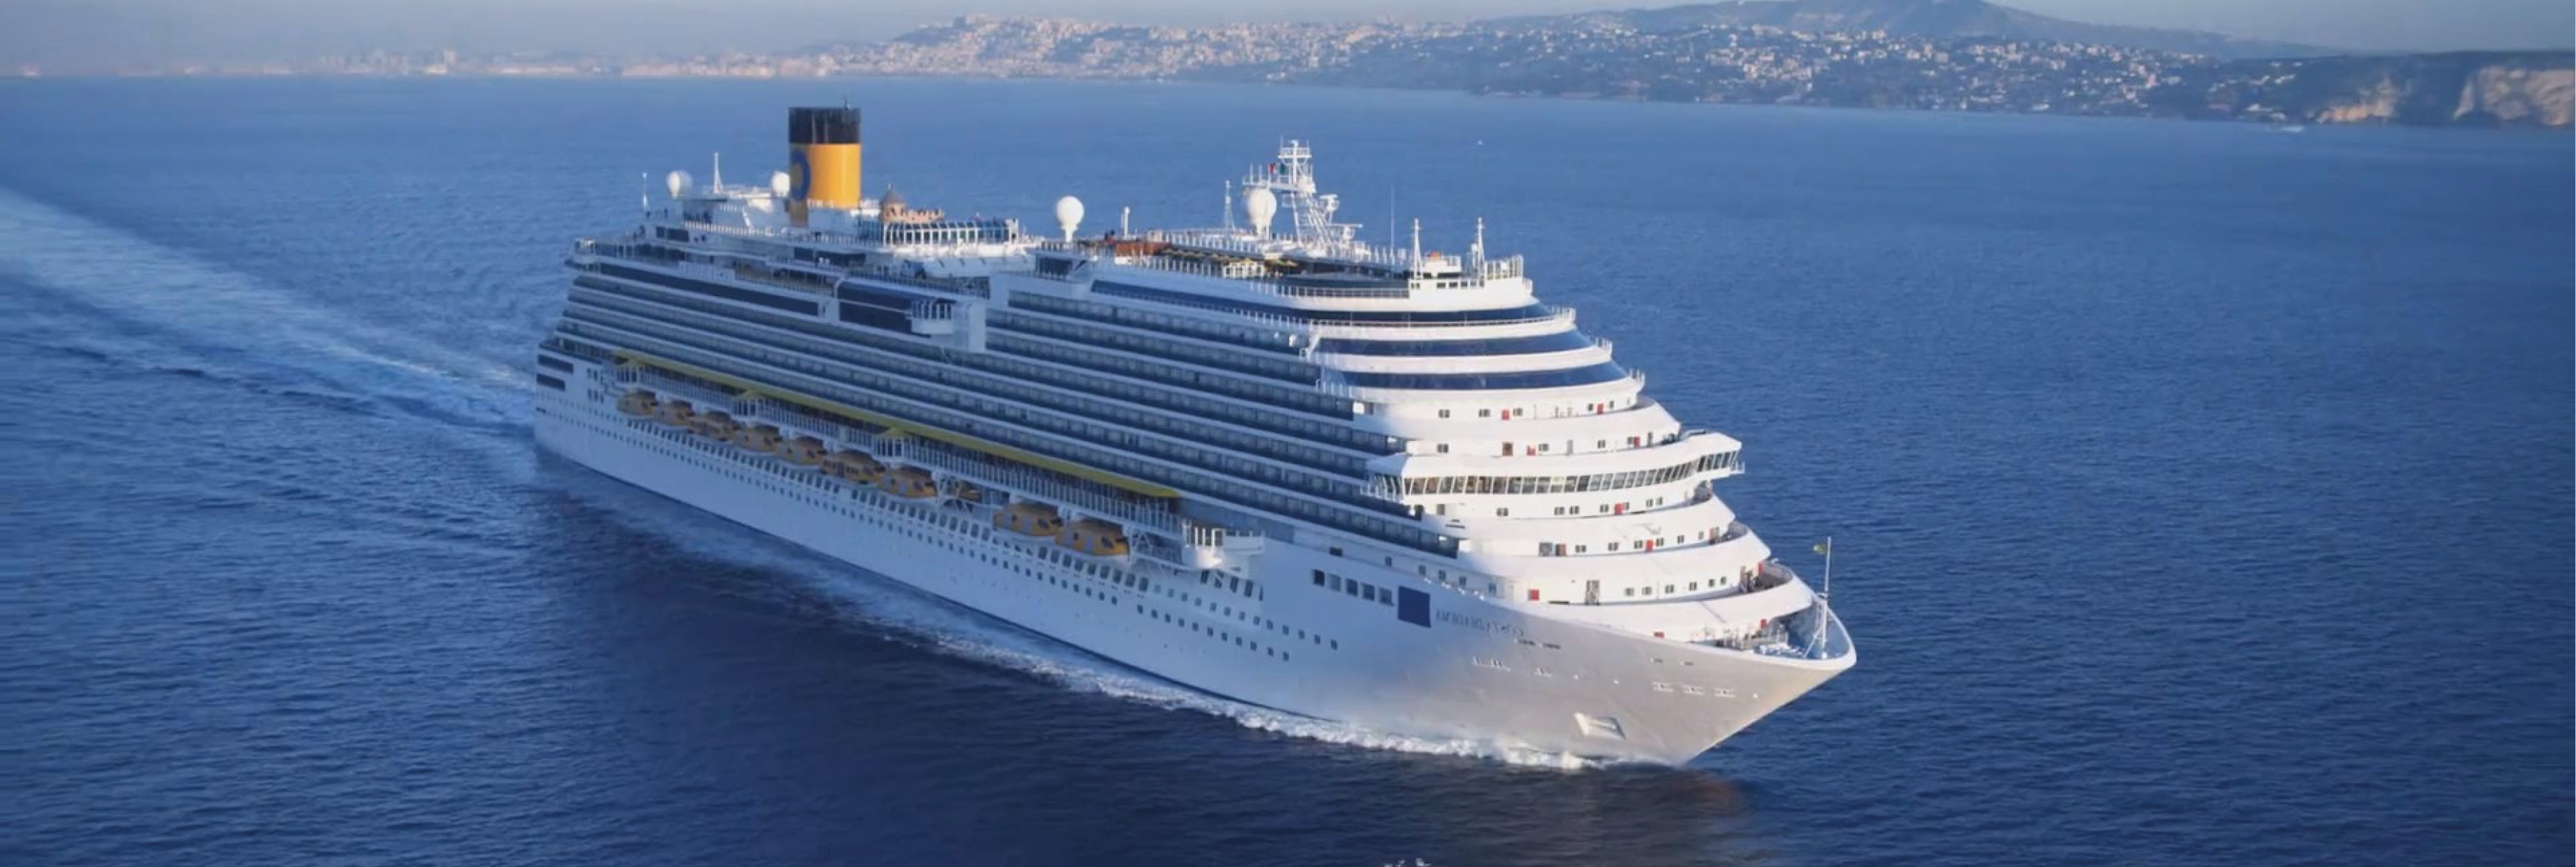 Winnow and Costa Cruises team up to halve food waste